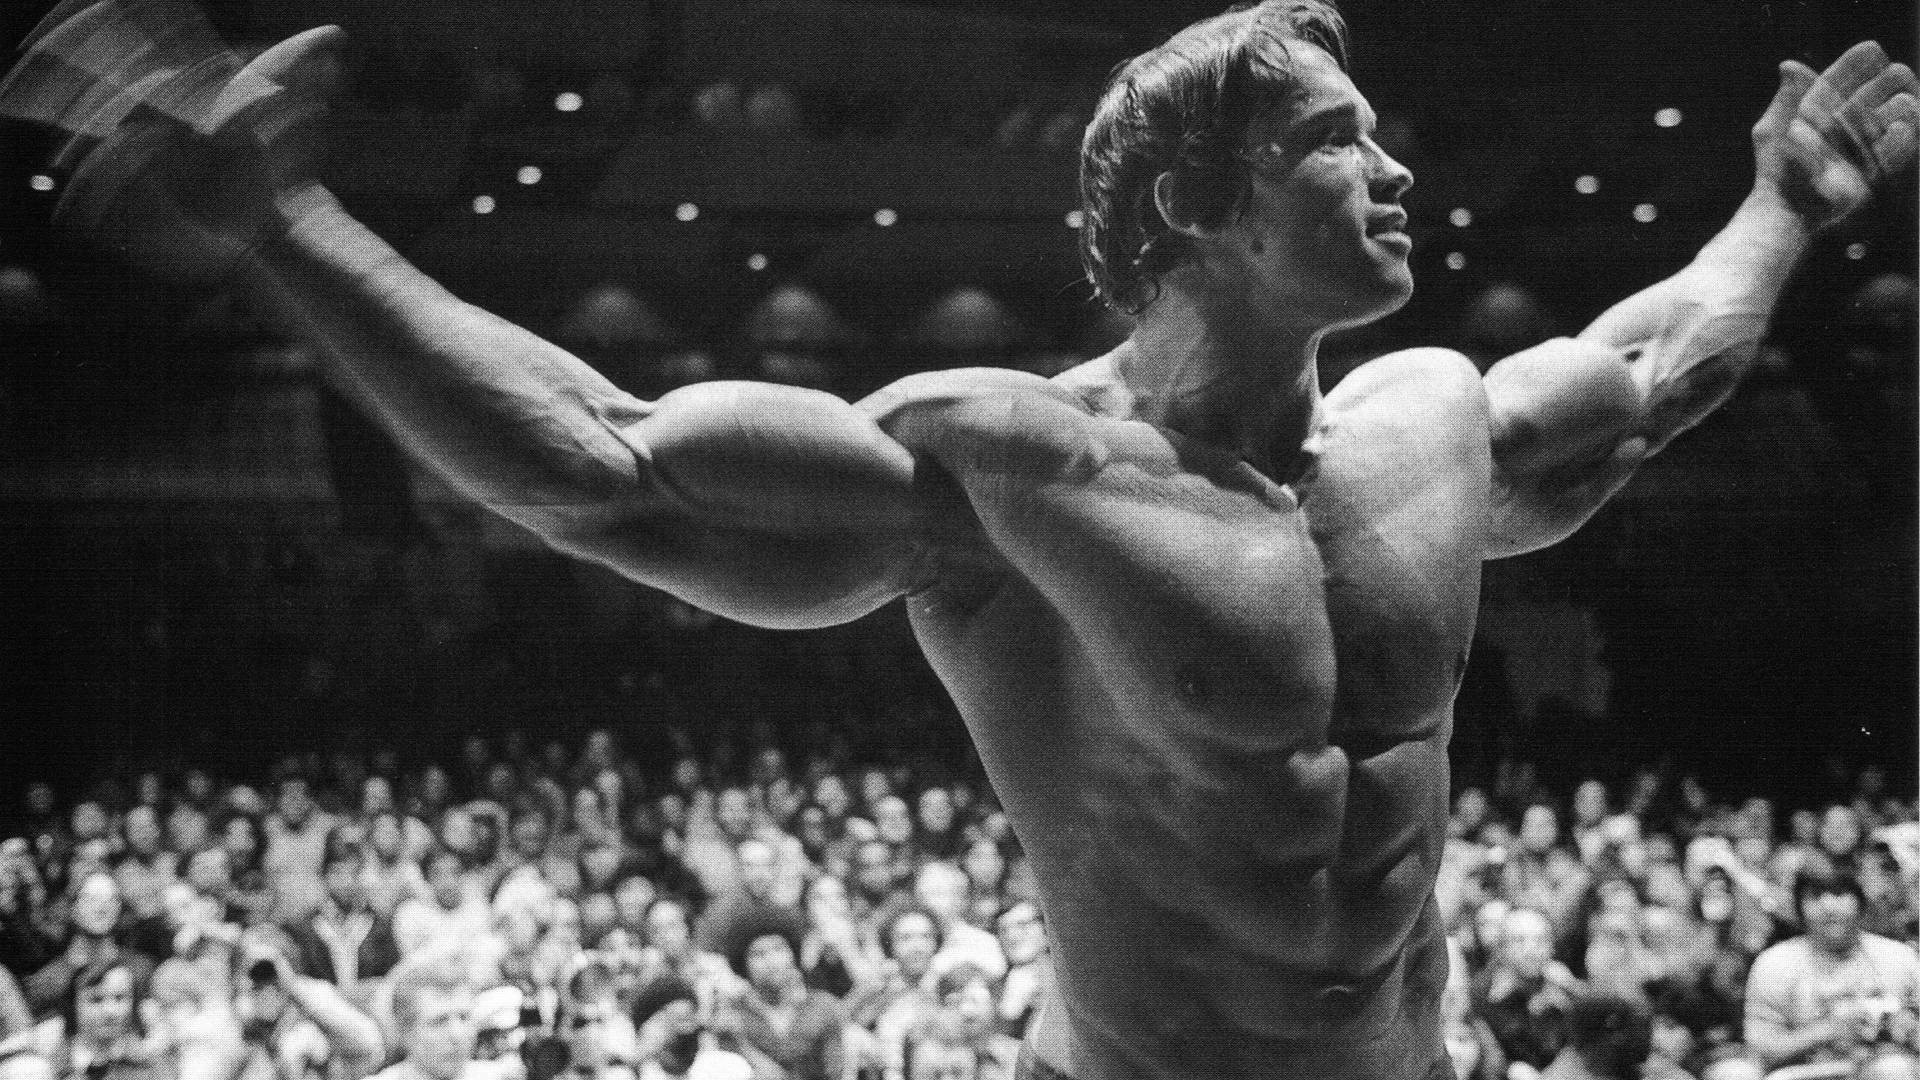 People 1920x1080 bodybuilding bodybuilder Arnold Schwarzenegger history monochrome muscles abs actor motivational men muscular arms up